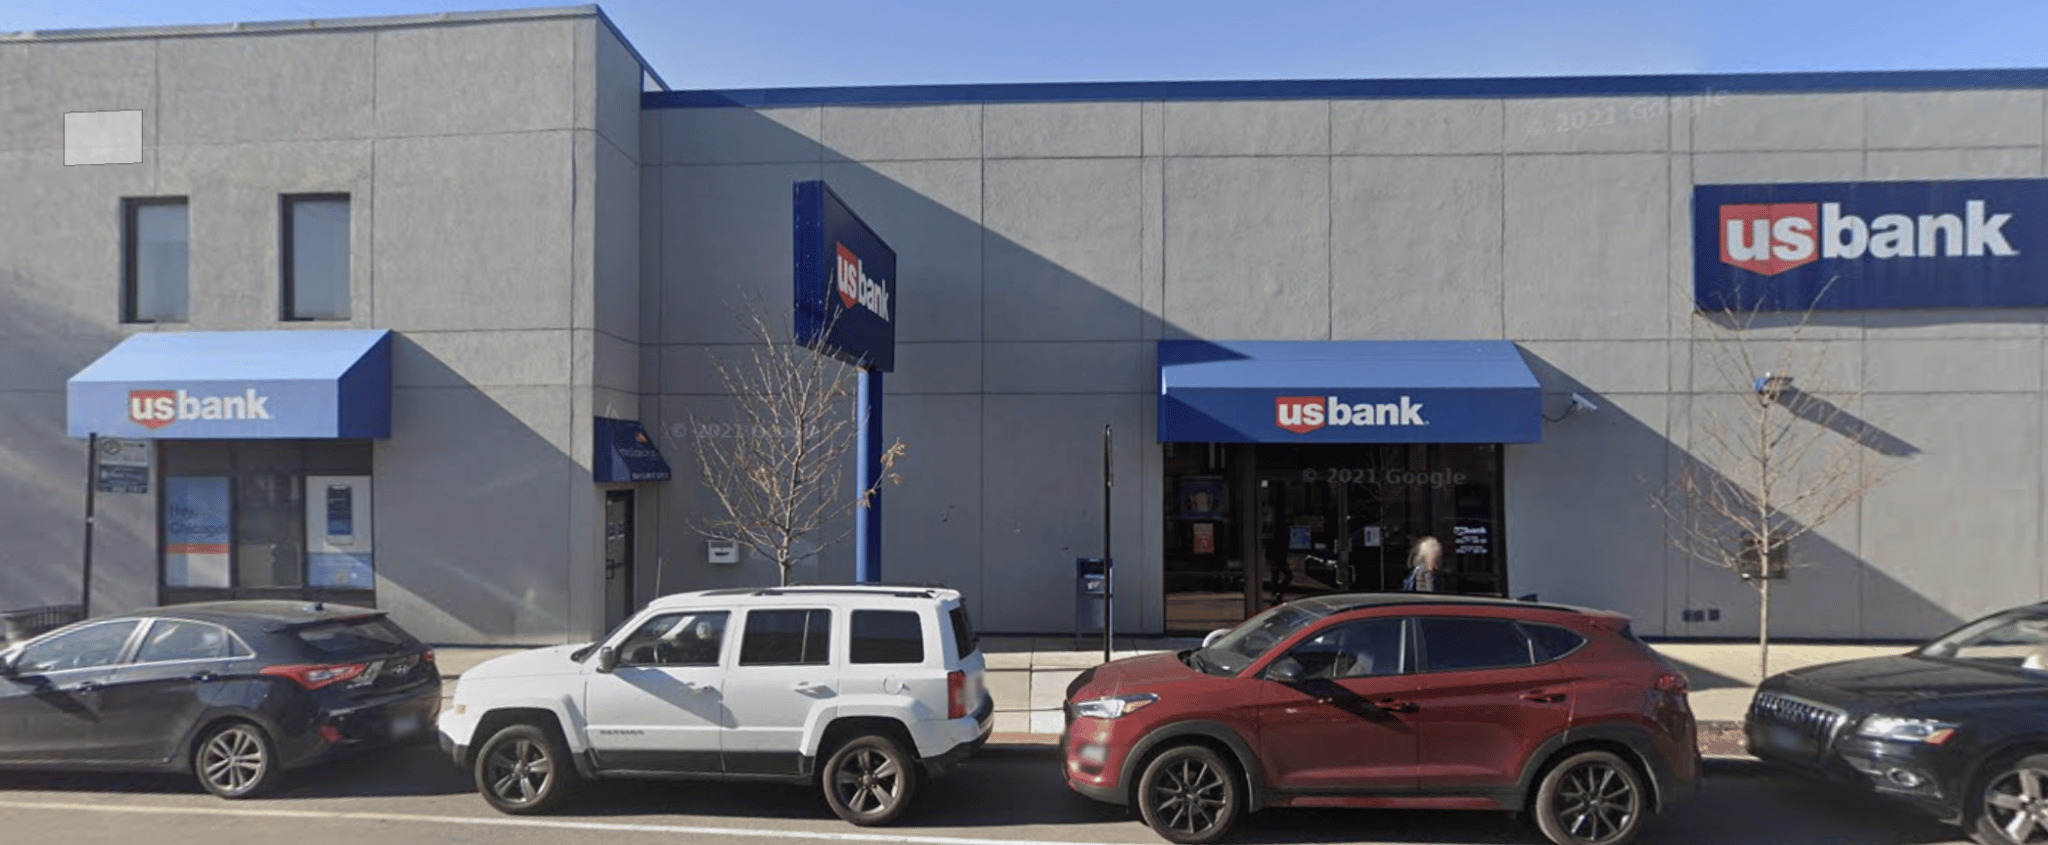 U.S. Bank seen in Andersonville